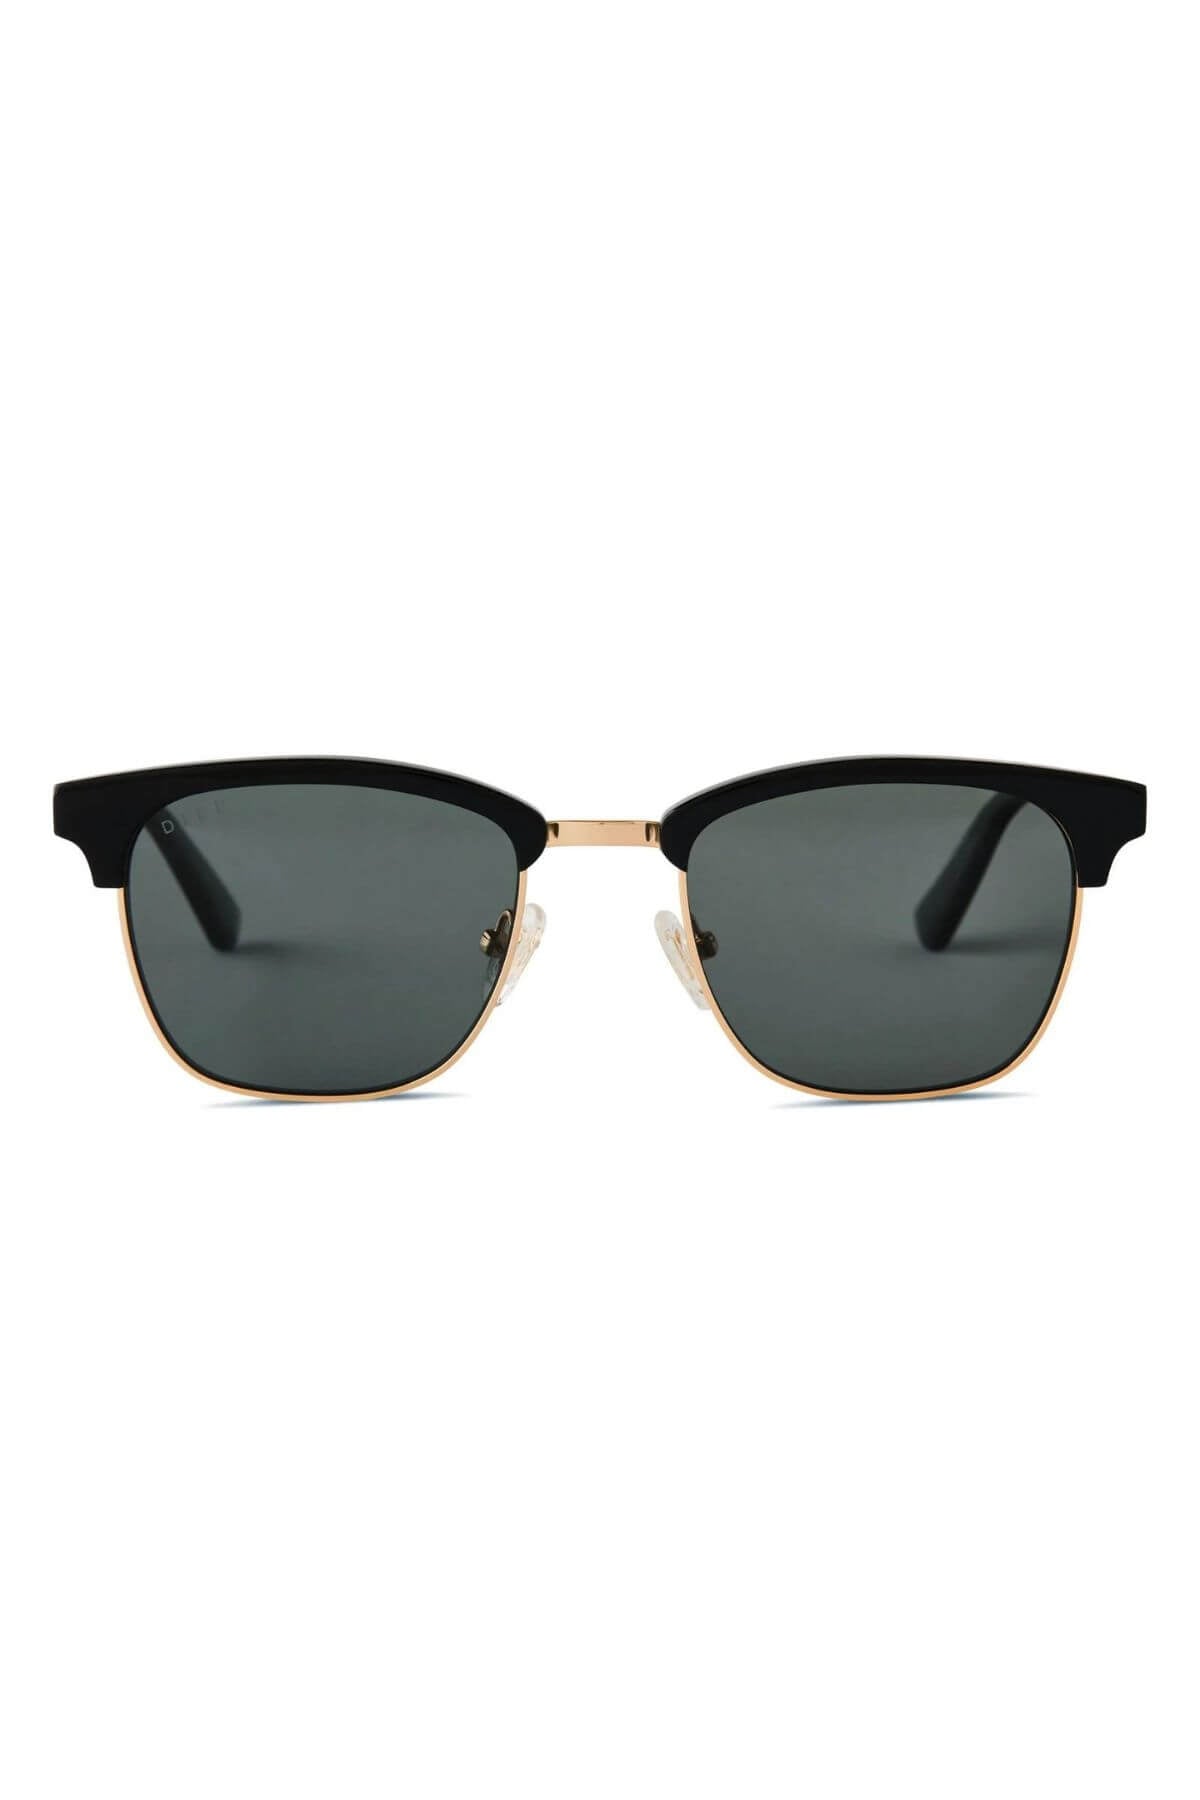 Women's black and gold sunglasses | Diff Eyewear | Kariella